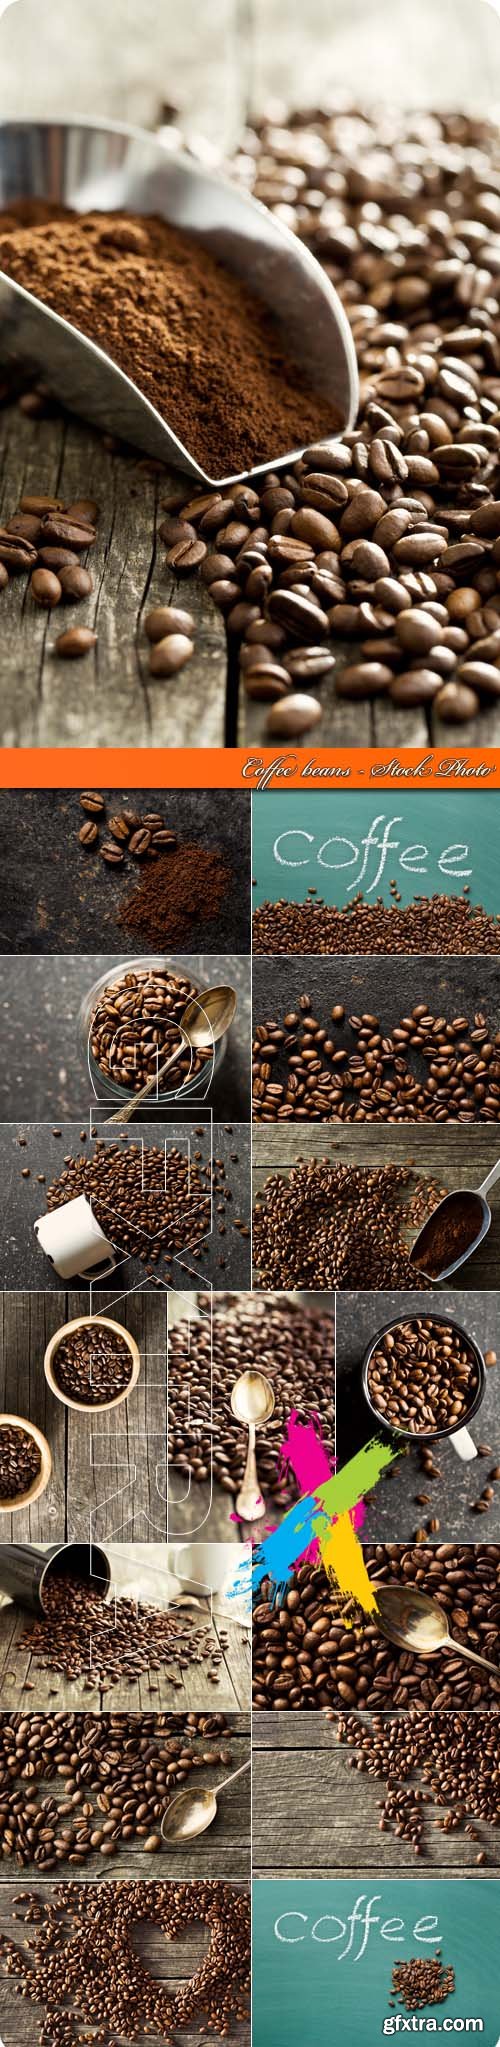 Coffee beans - Stock Photo